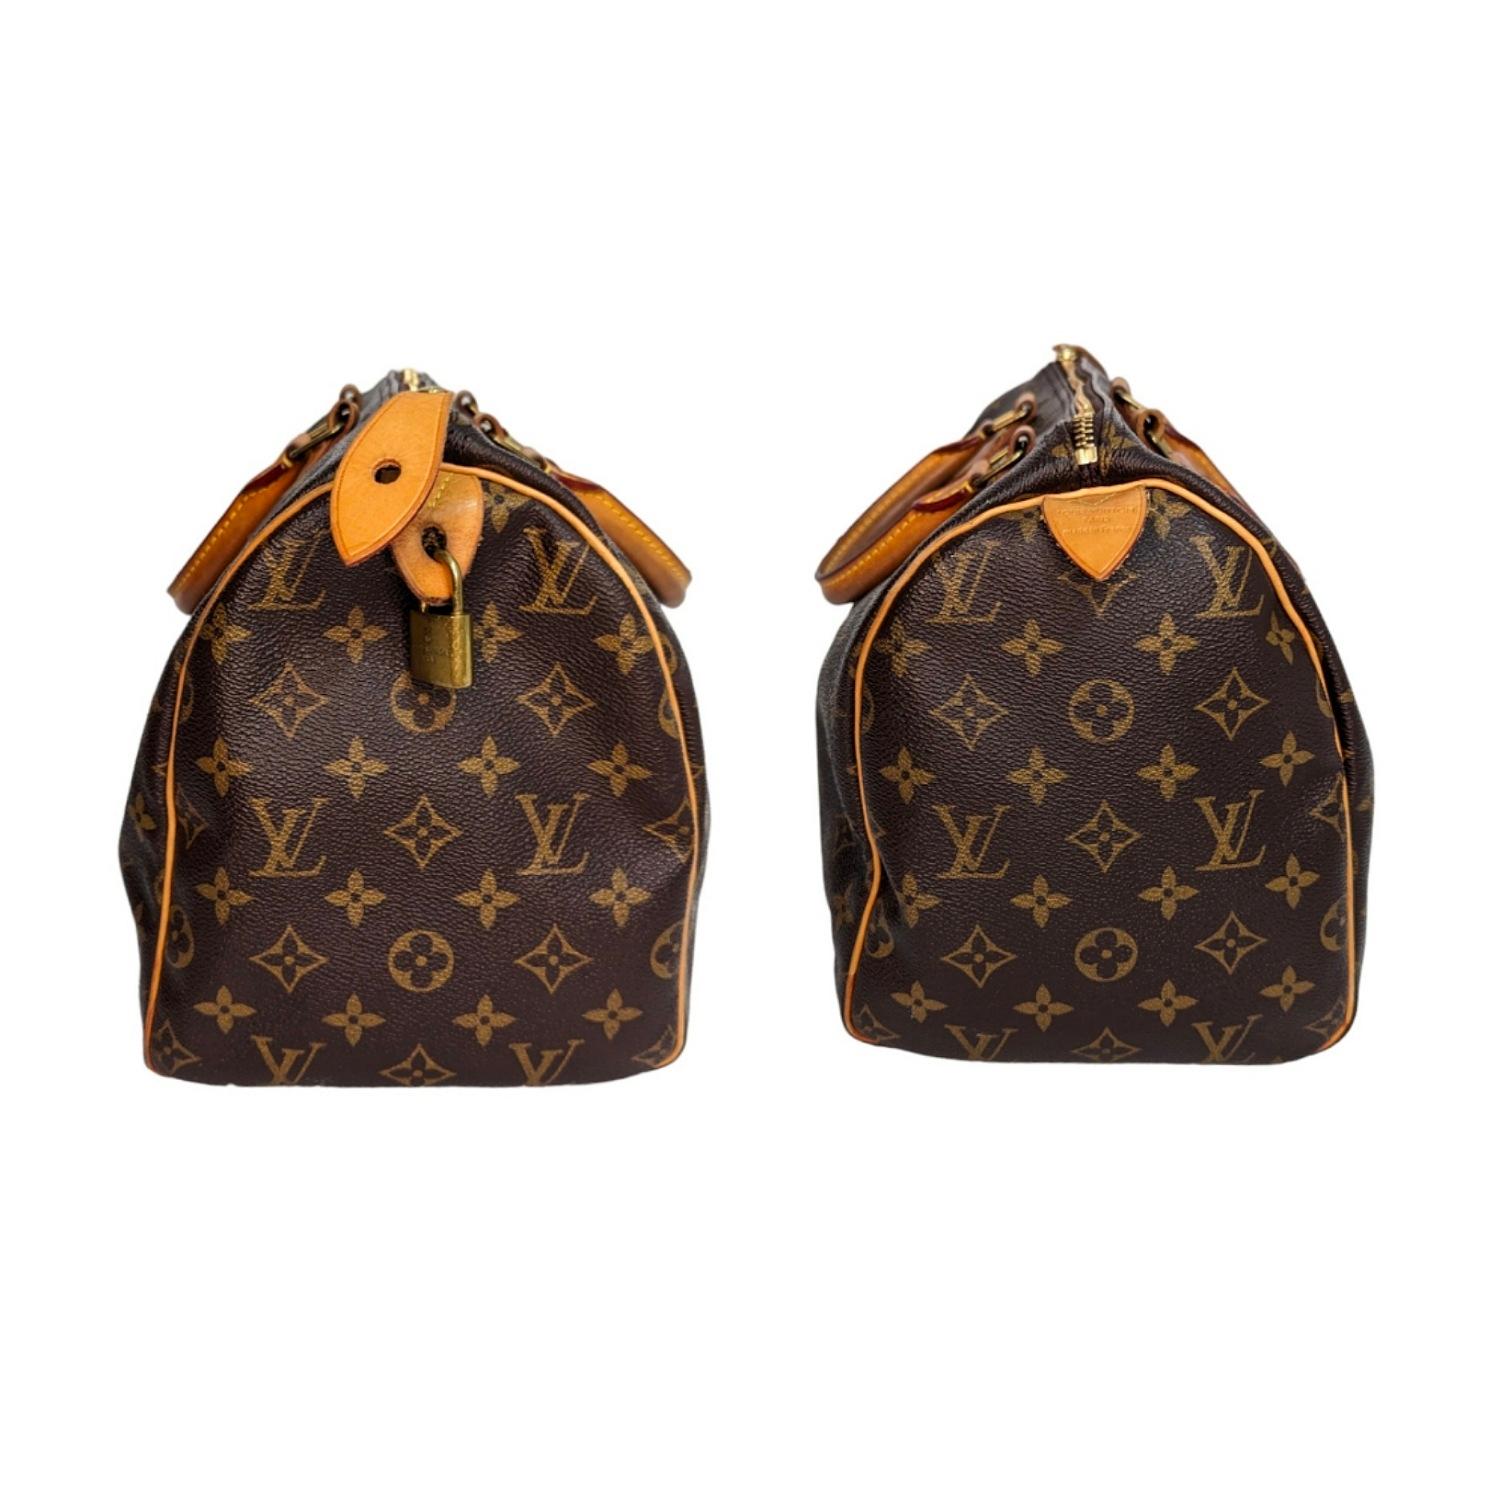 Louis Vuitton 2014 Monogram Canvas Speedy 30 Bag In Good Condition For Sale In Scottsdale, AZ